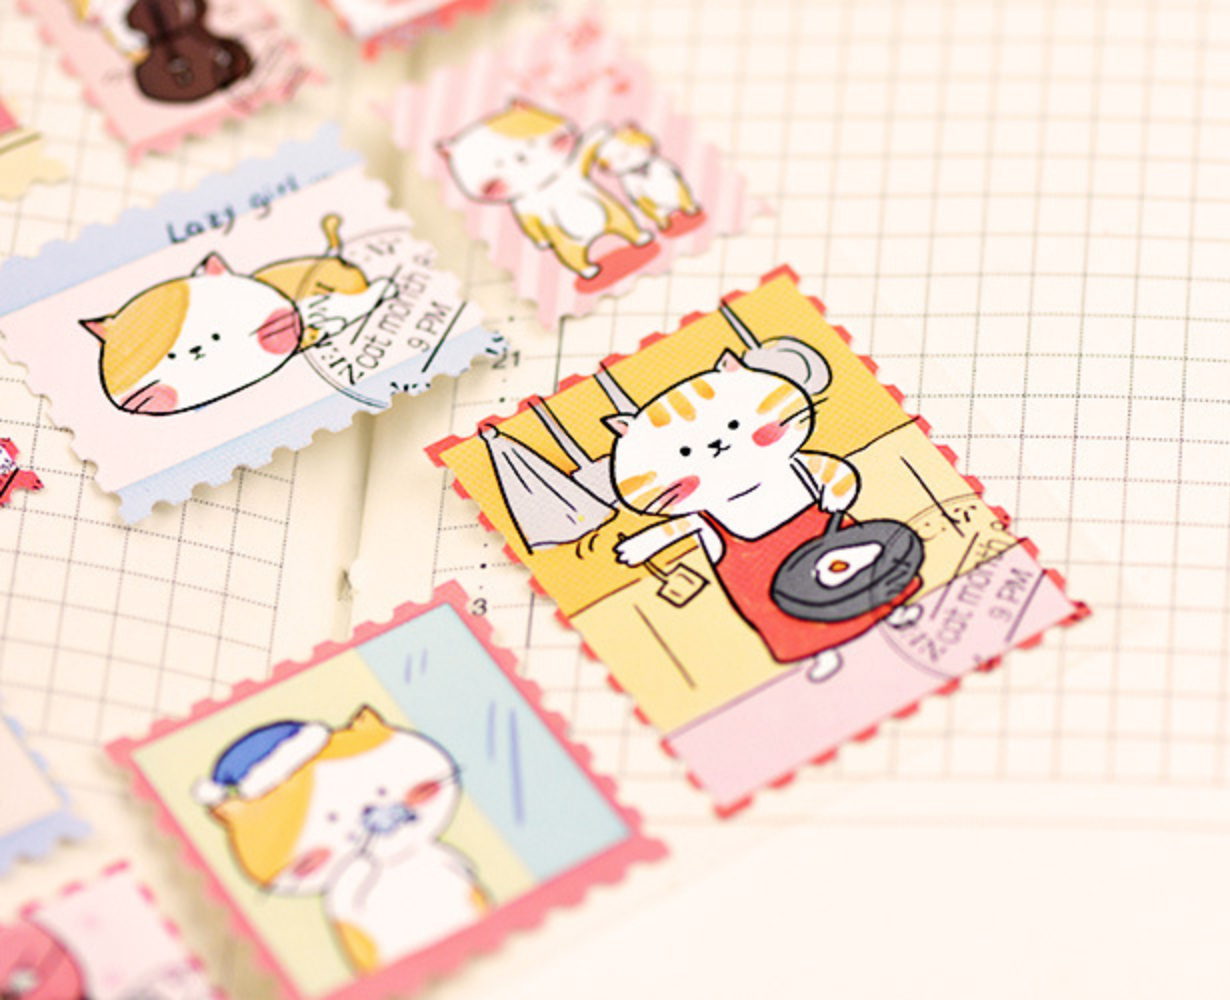 Pink Rabbit Stamp Stickers by Nekoni